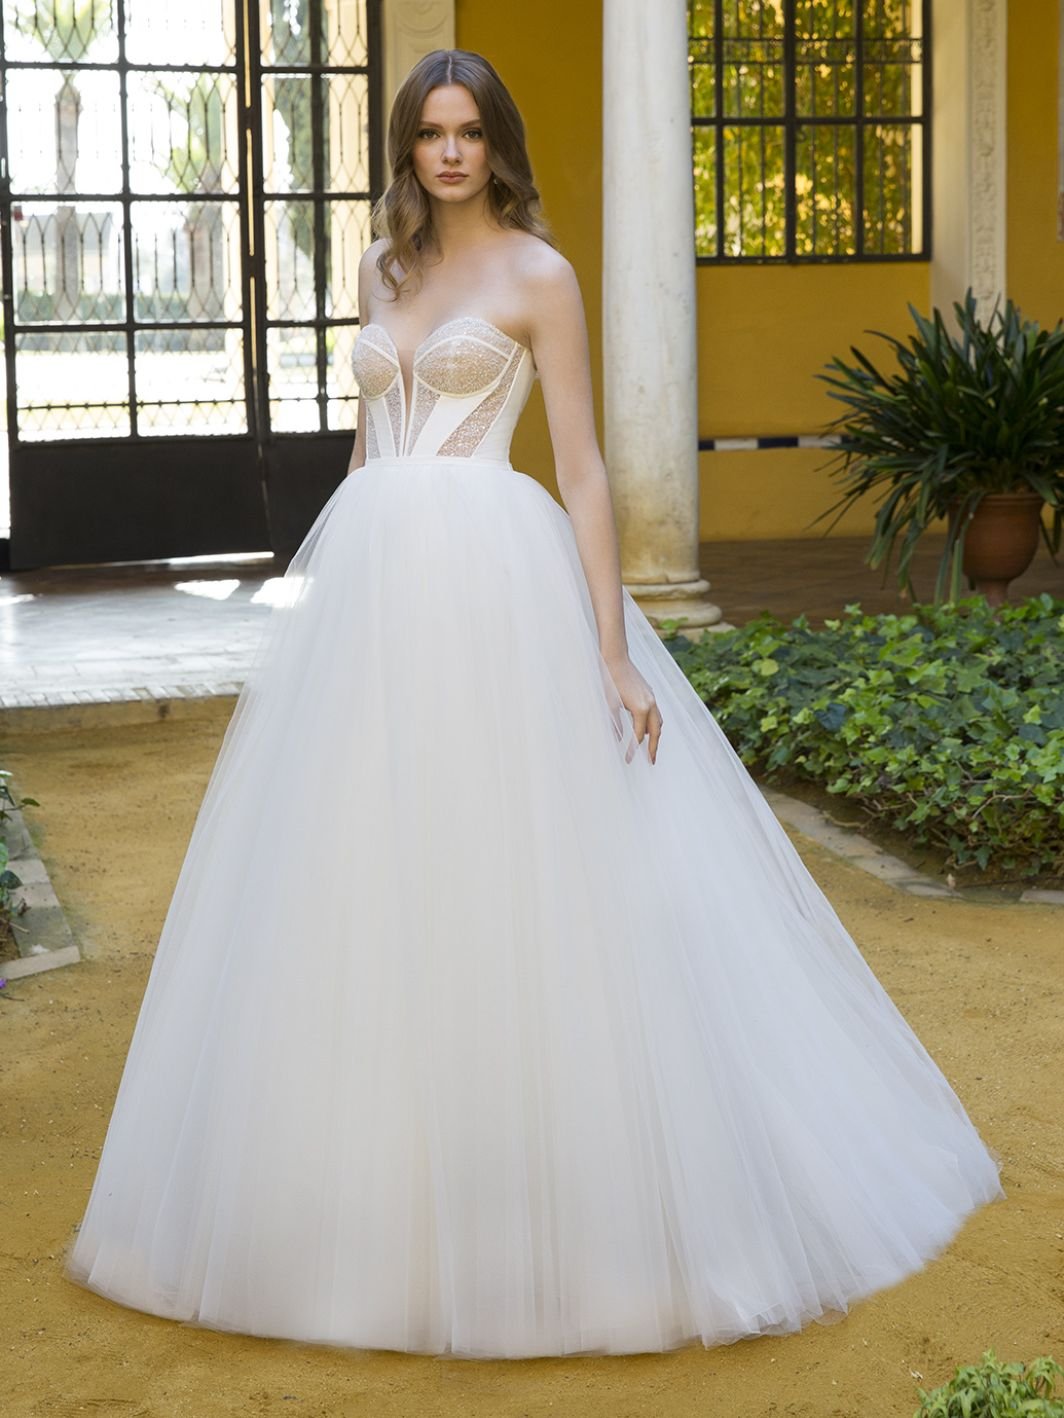 Best Minimony Wedding Dresses | David's Bridal Blog